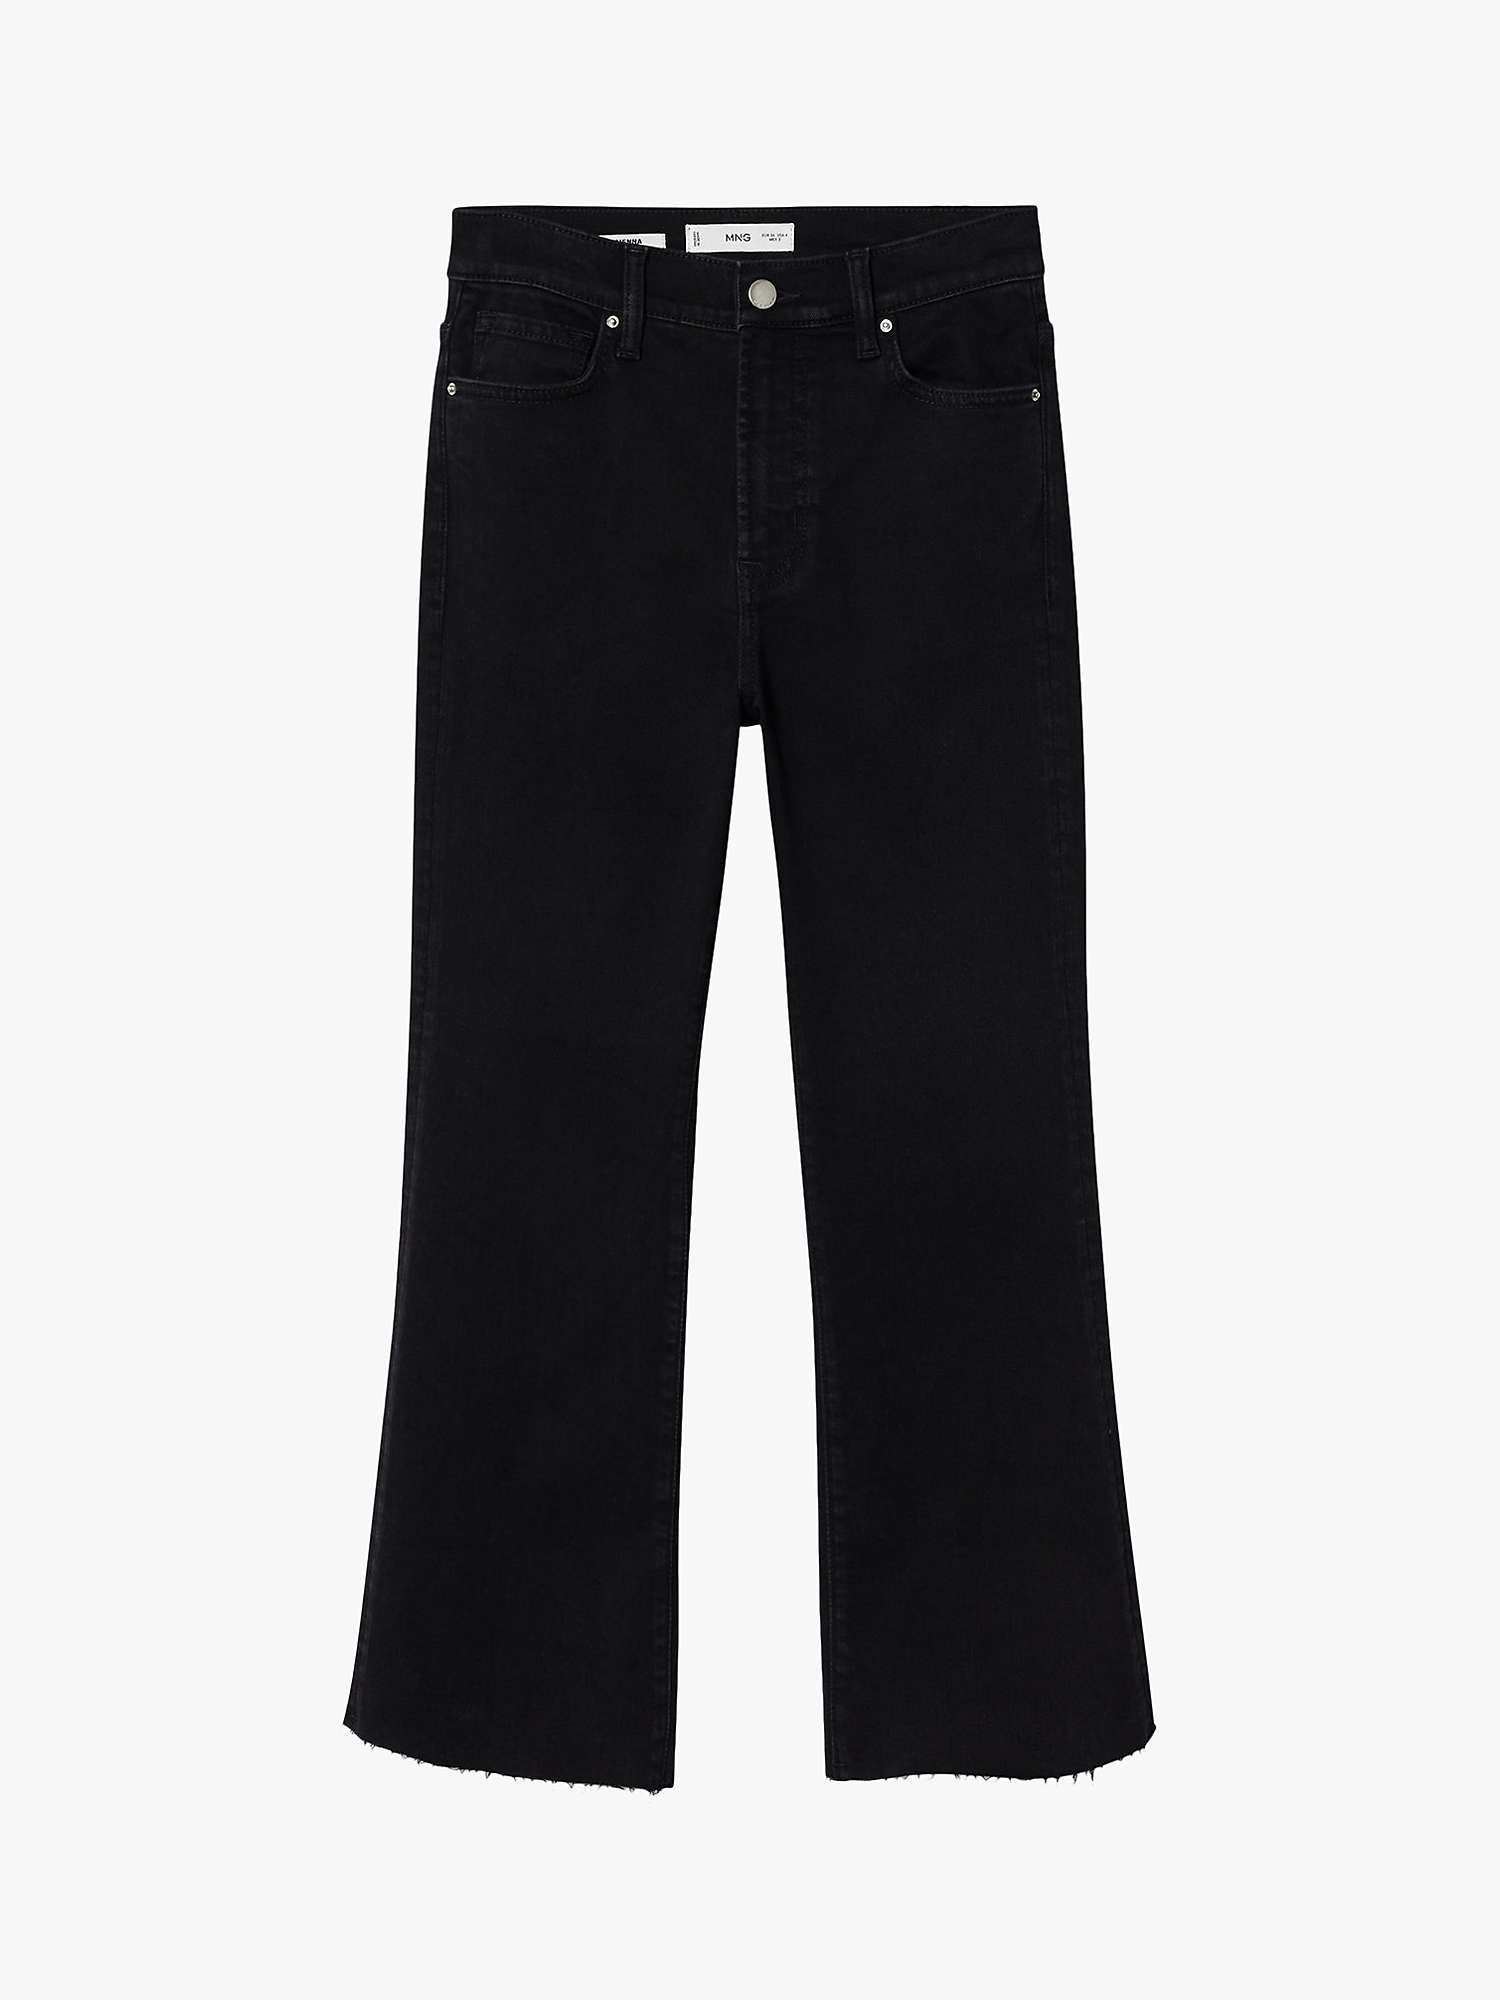 Mango Sienna Straight Leg Jeans, Black at John Lewis & Partners